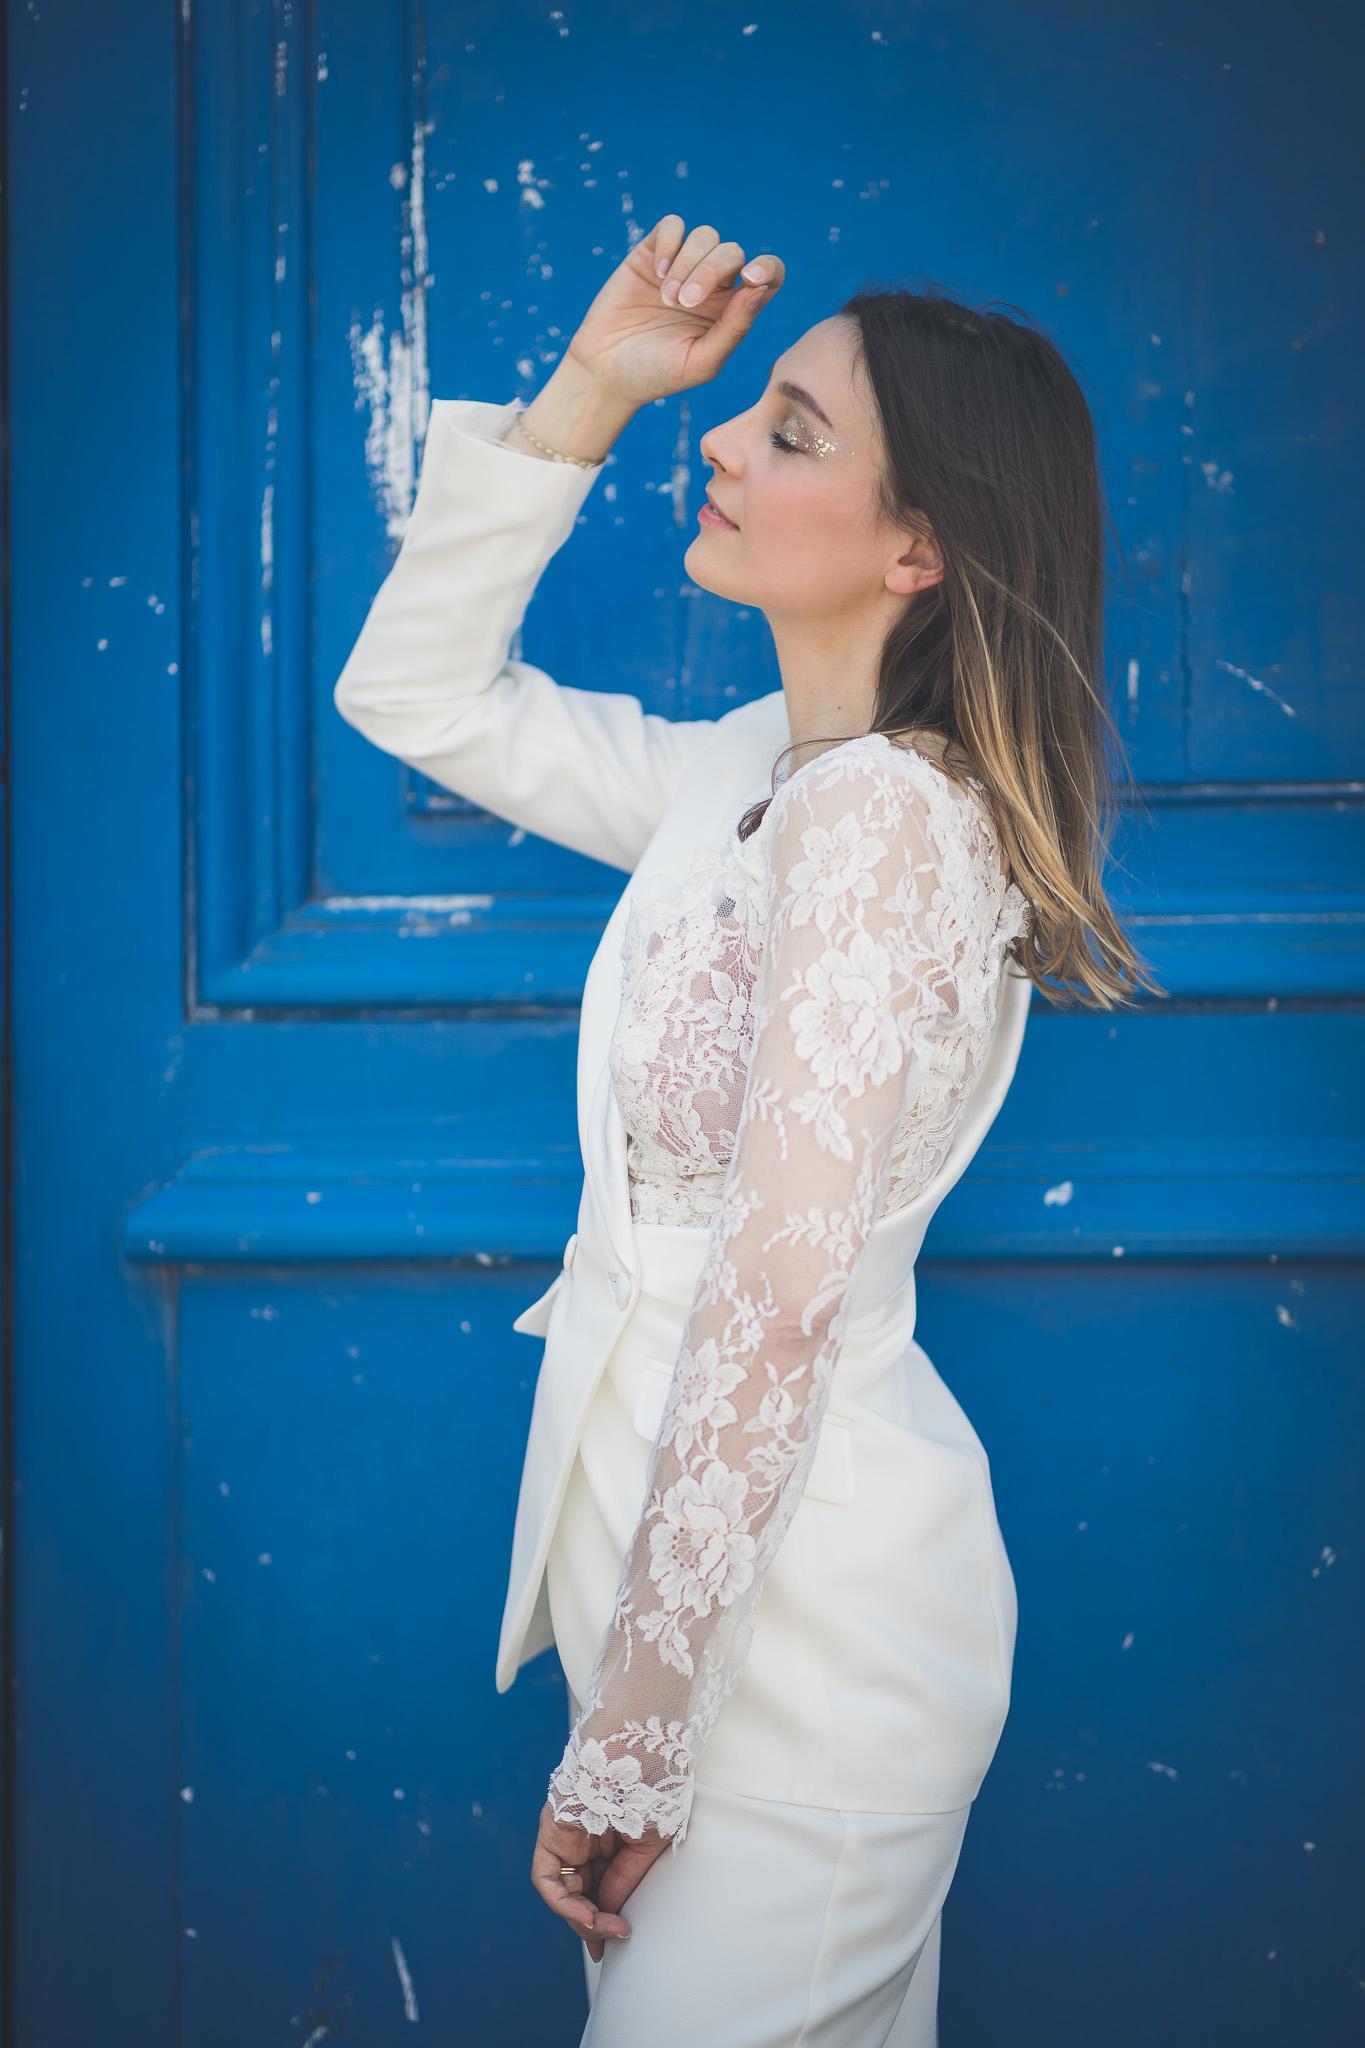 shooting photo entrepreneuse robe de mariage lou calista chanteuse contenu réseaux sociaux
kathia koy photographie